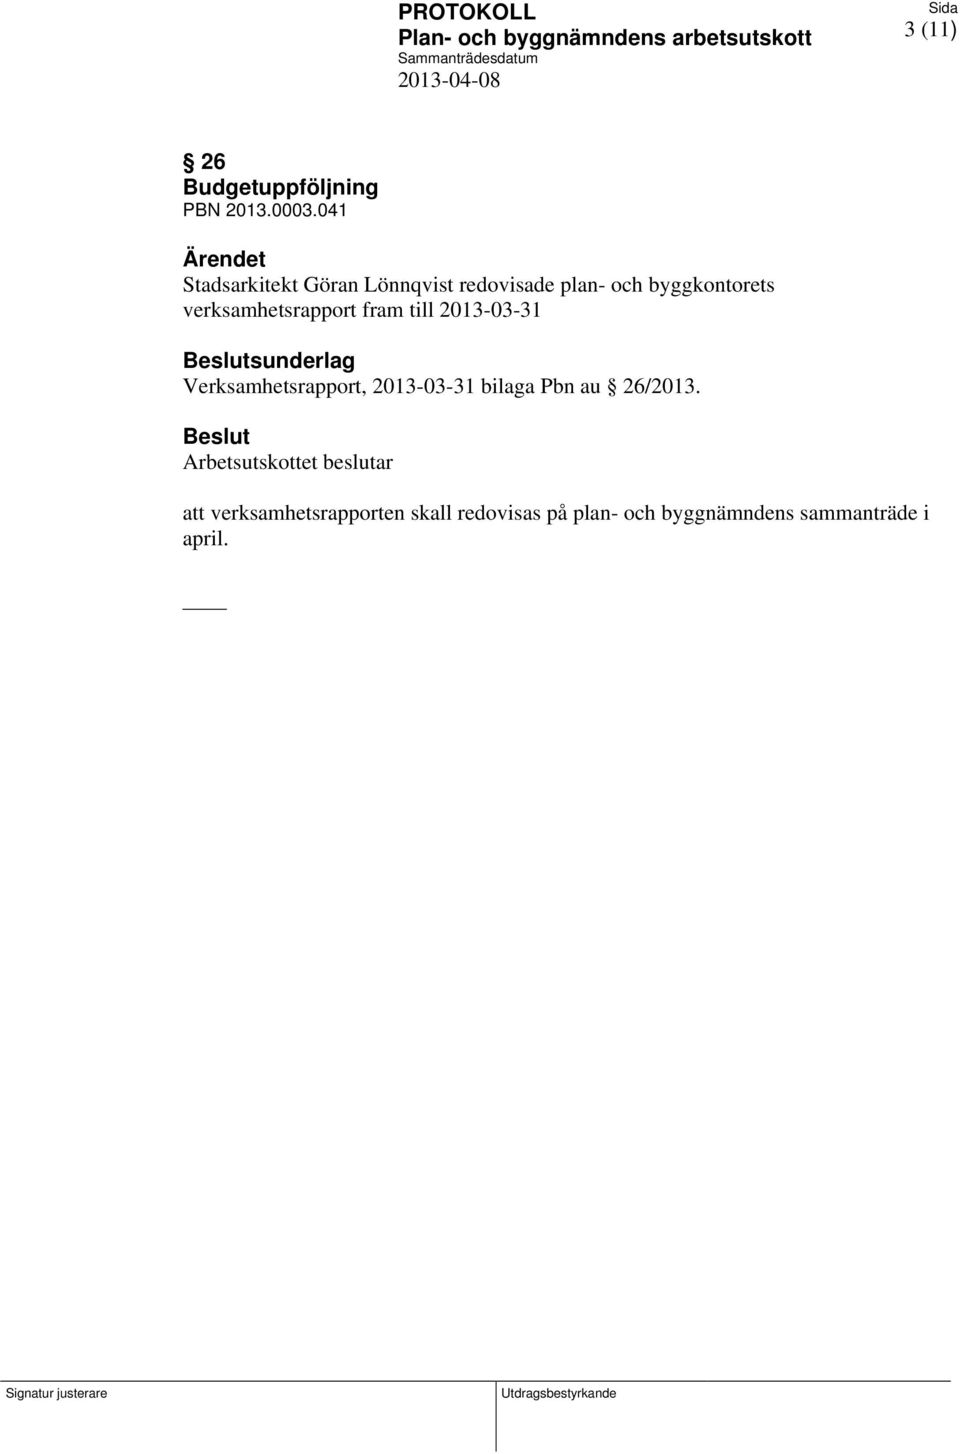 verksamhetsrapport fram till 2013-03-31 Verksamhetsrapport, 2013-03-31 bilaga